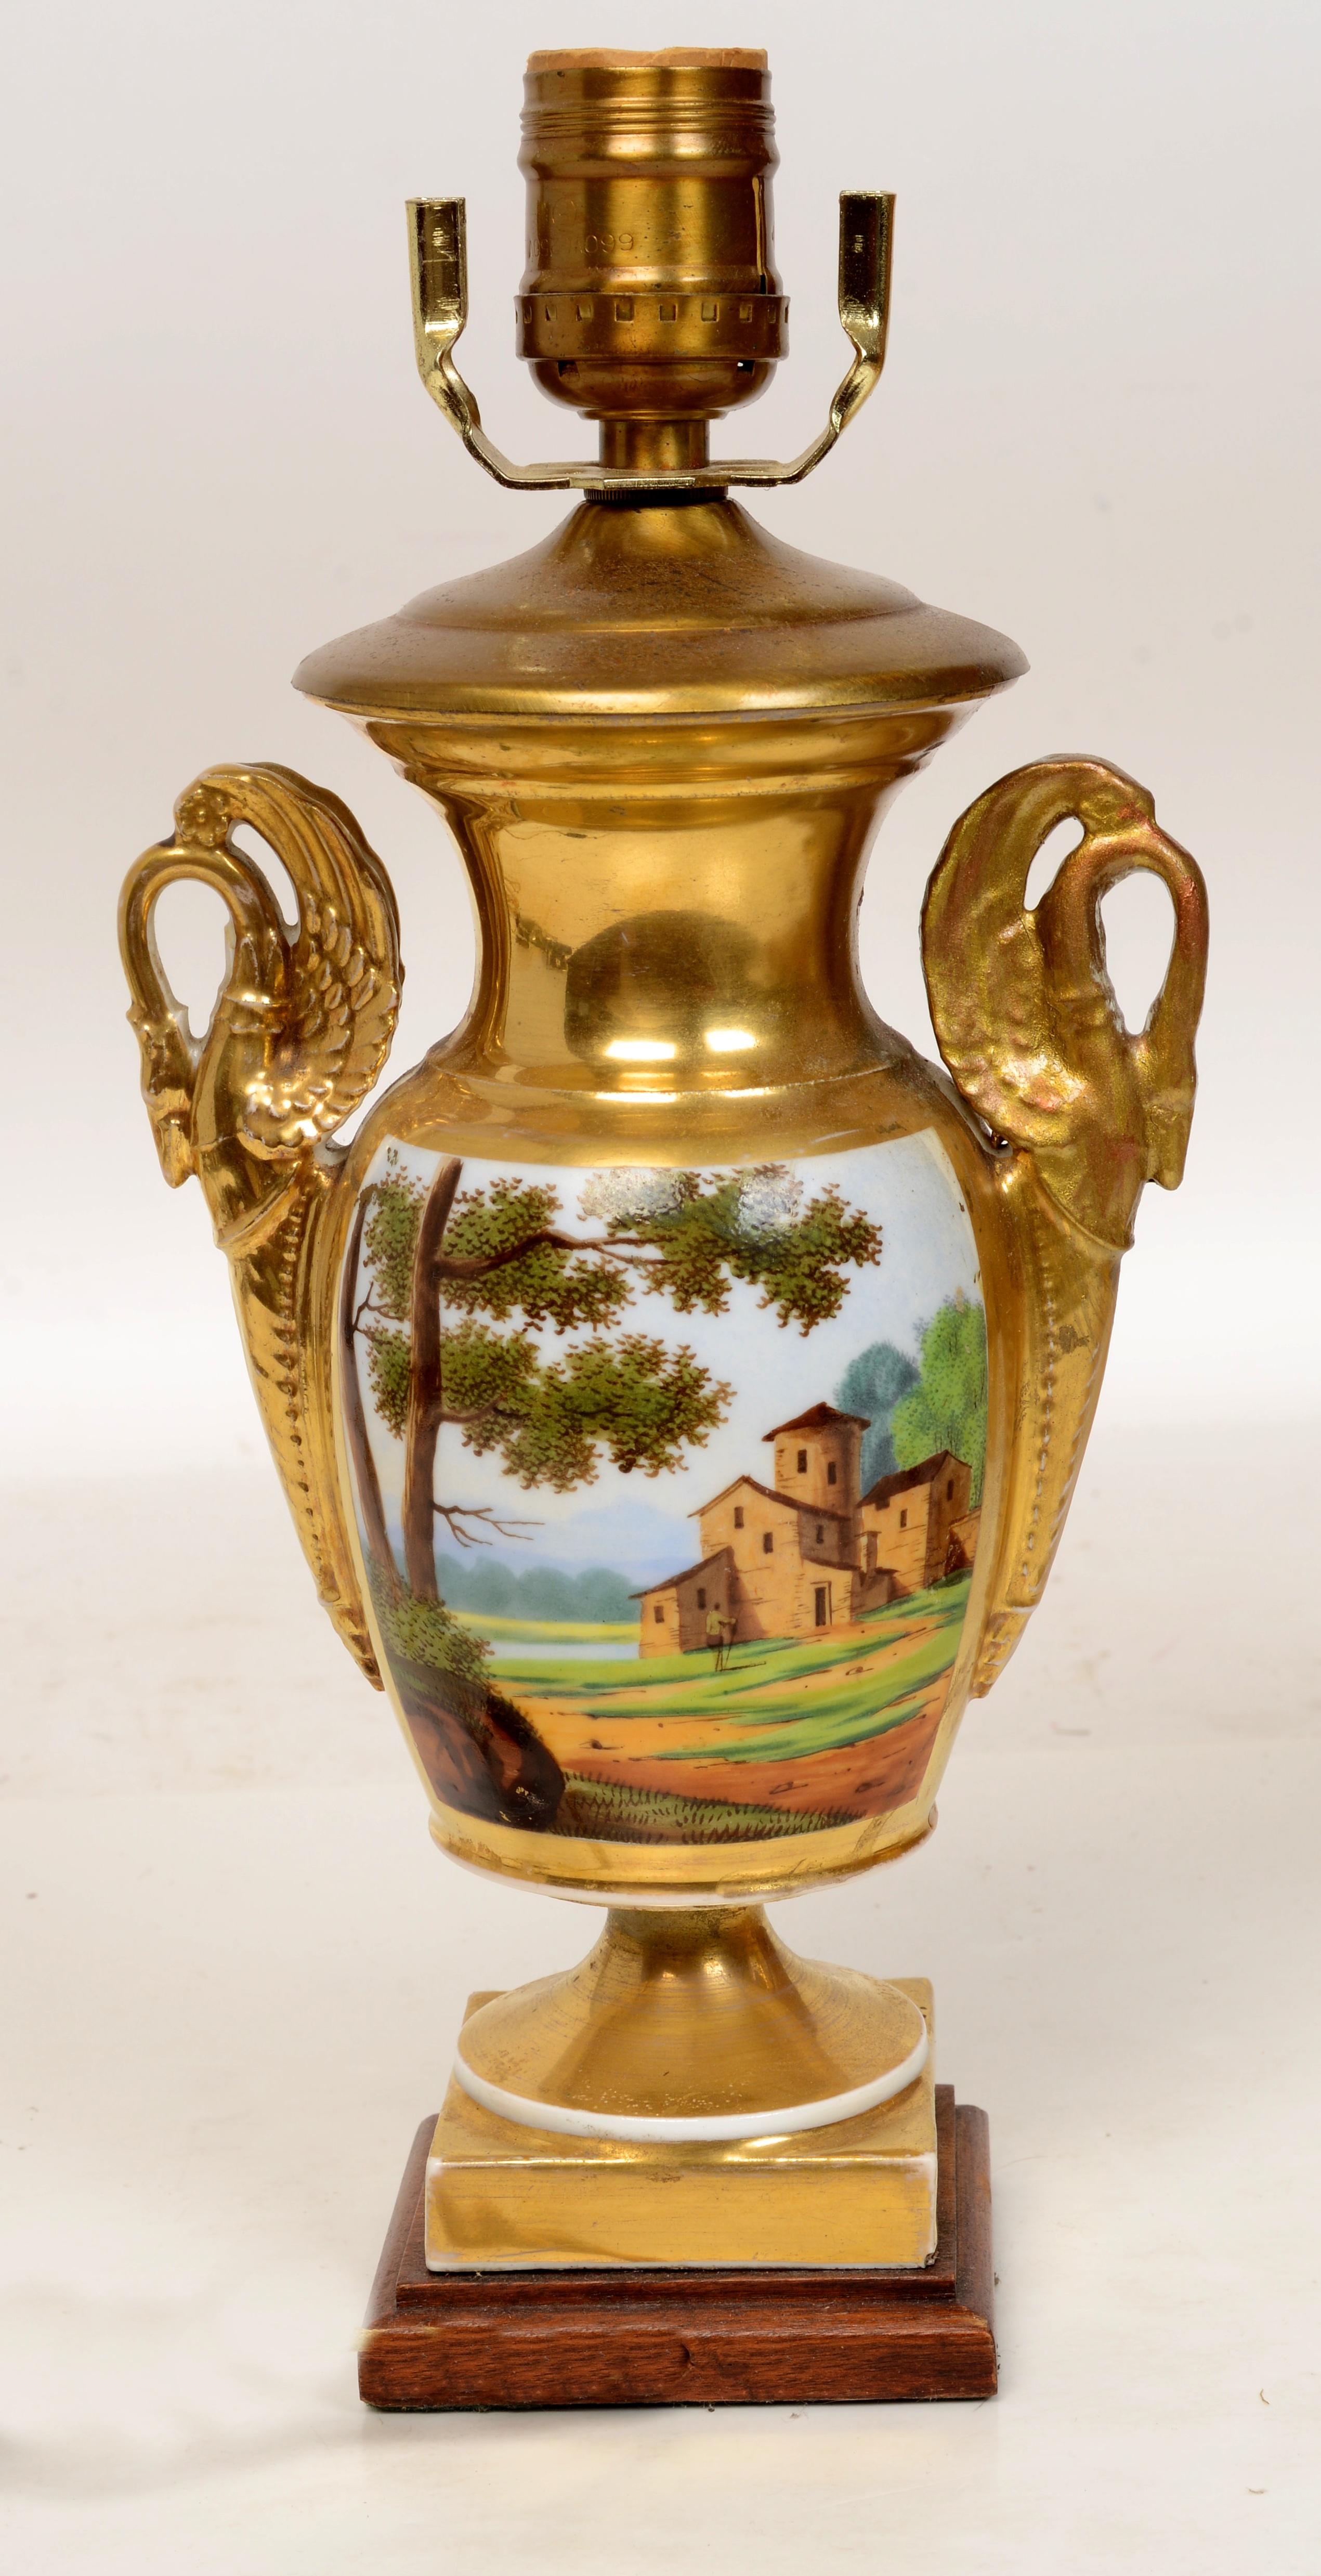 Porcelain Pr of French Old Paris or Vieux Paris Urns Now Converted into Table Lamps, C1810 For Sale